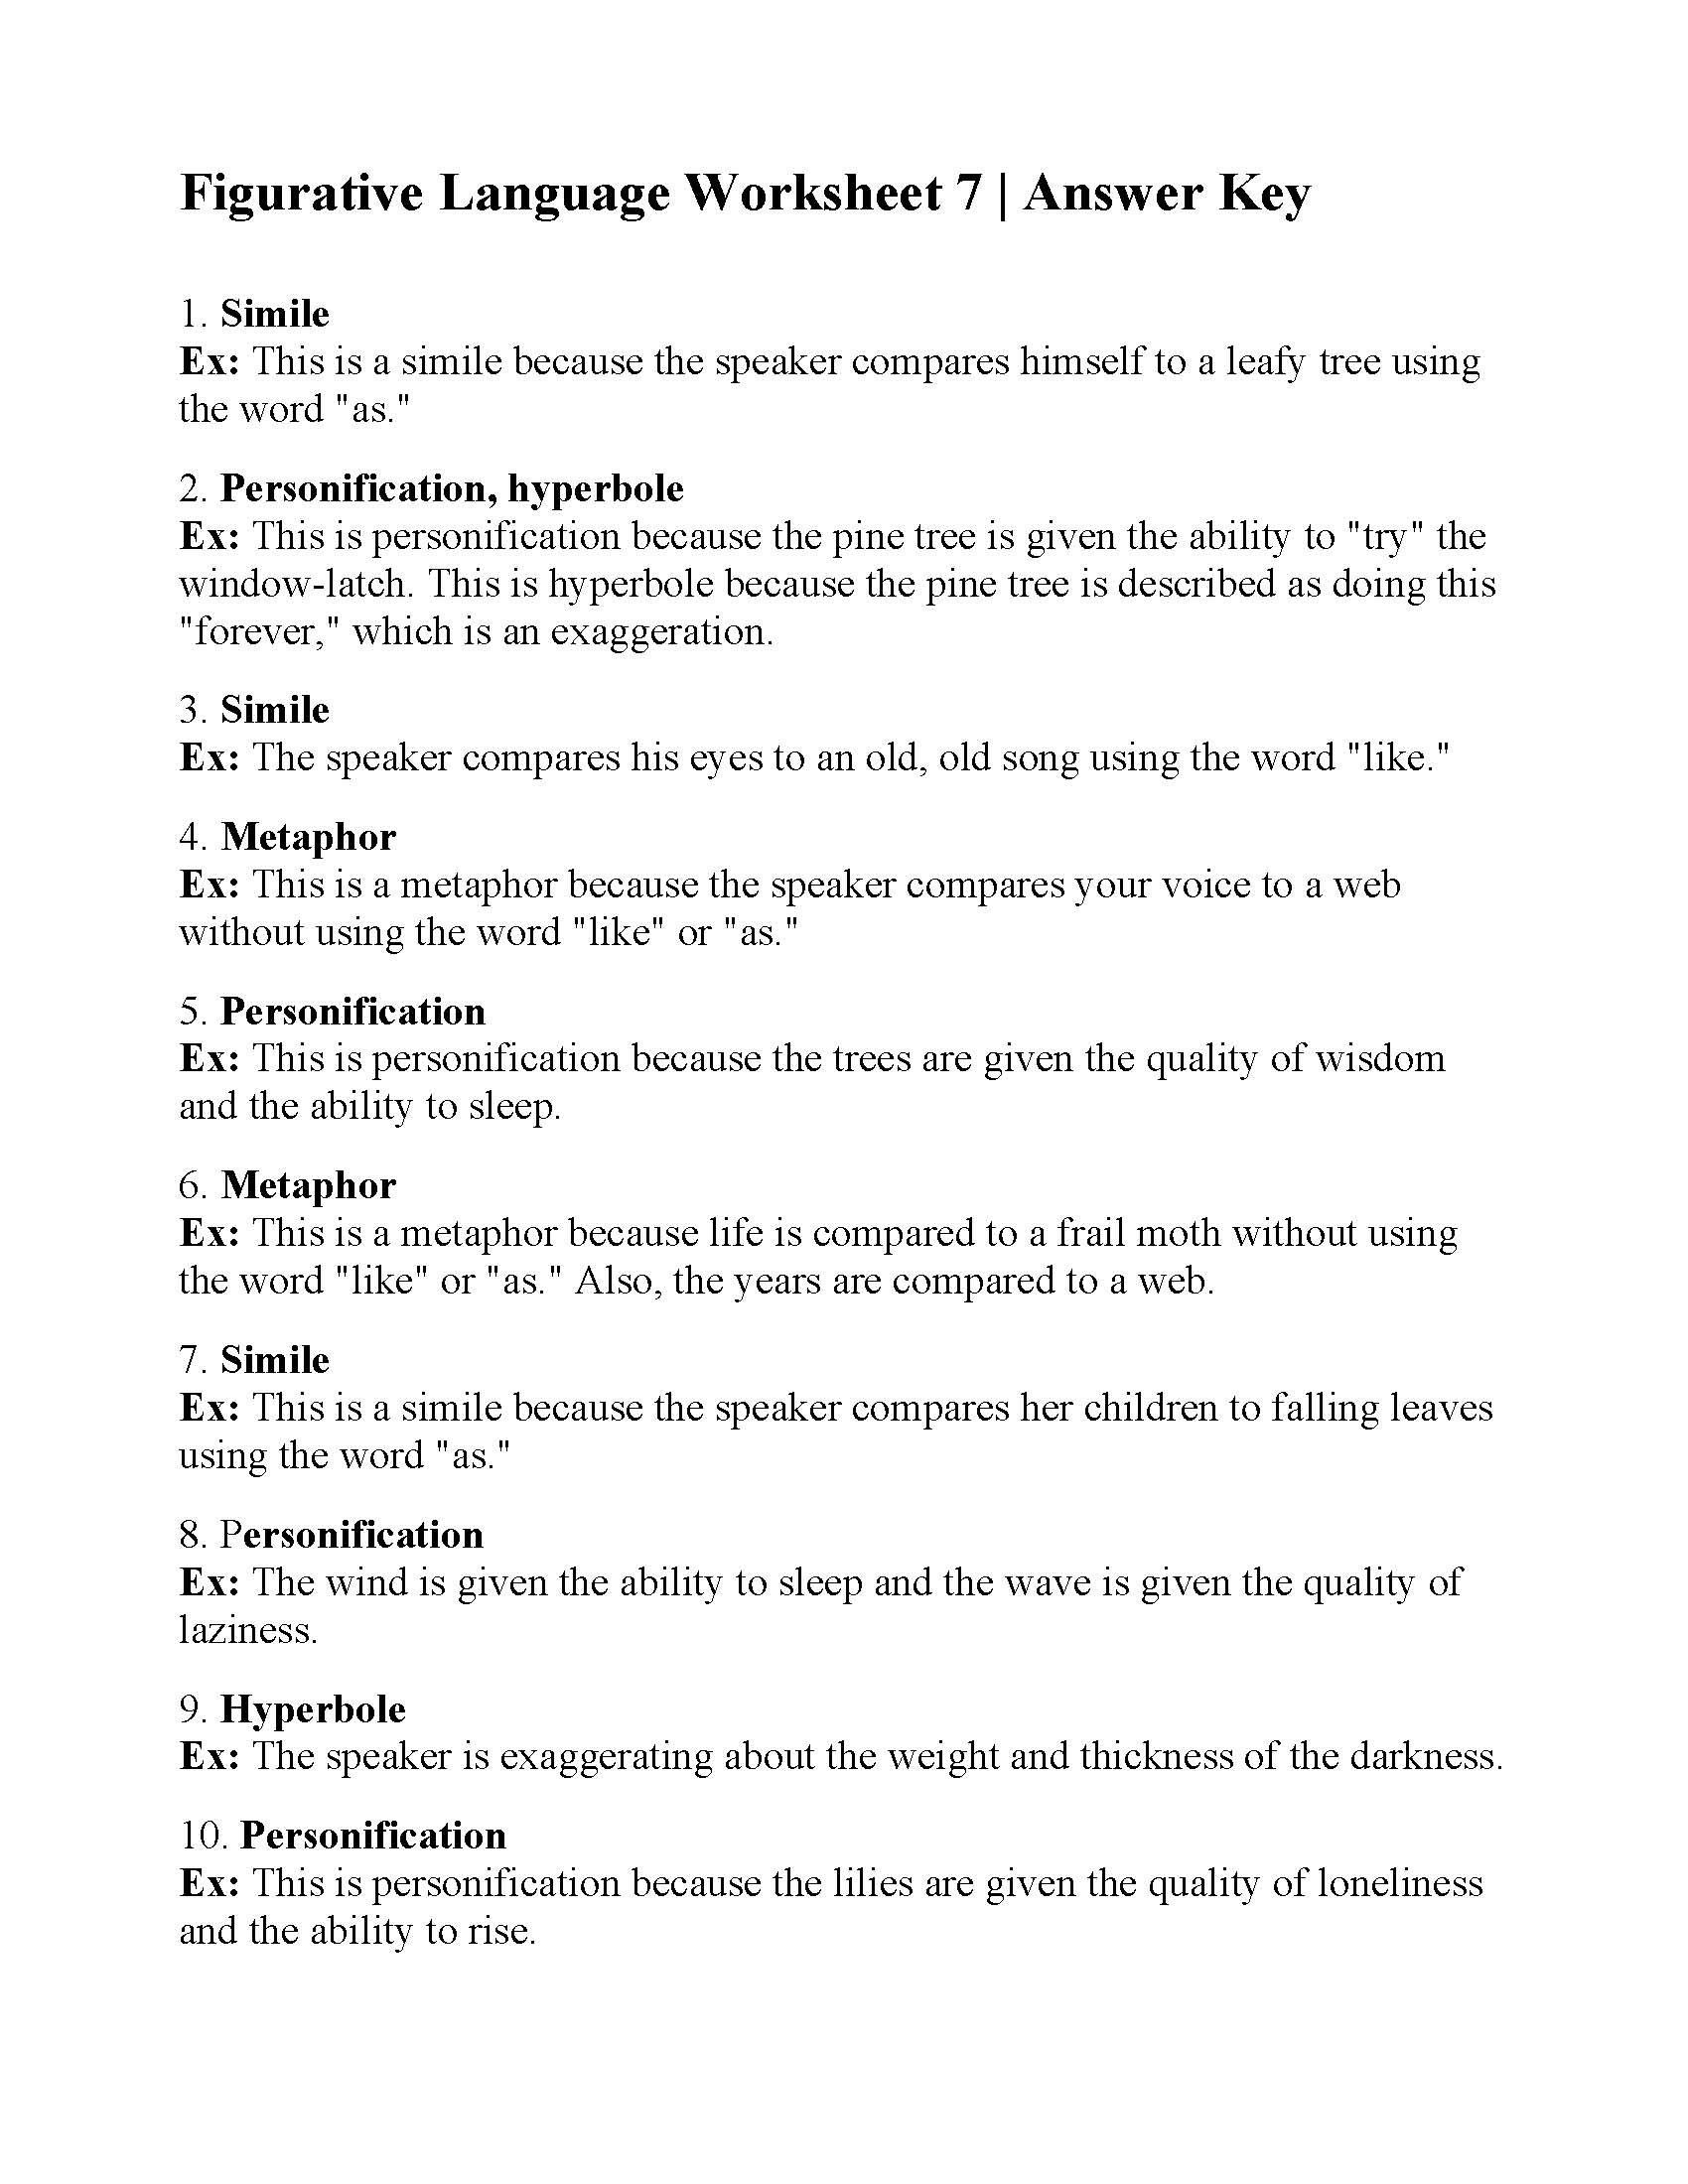 Figurative Language Worksheet 7  Answers With Figurative Language Worksheet 1